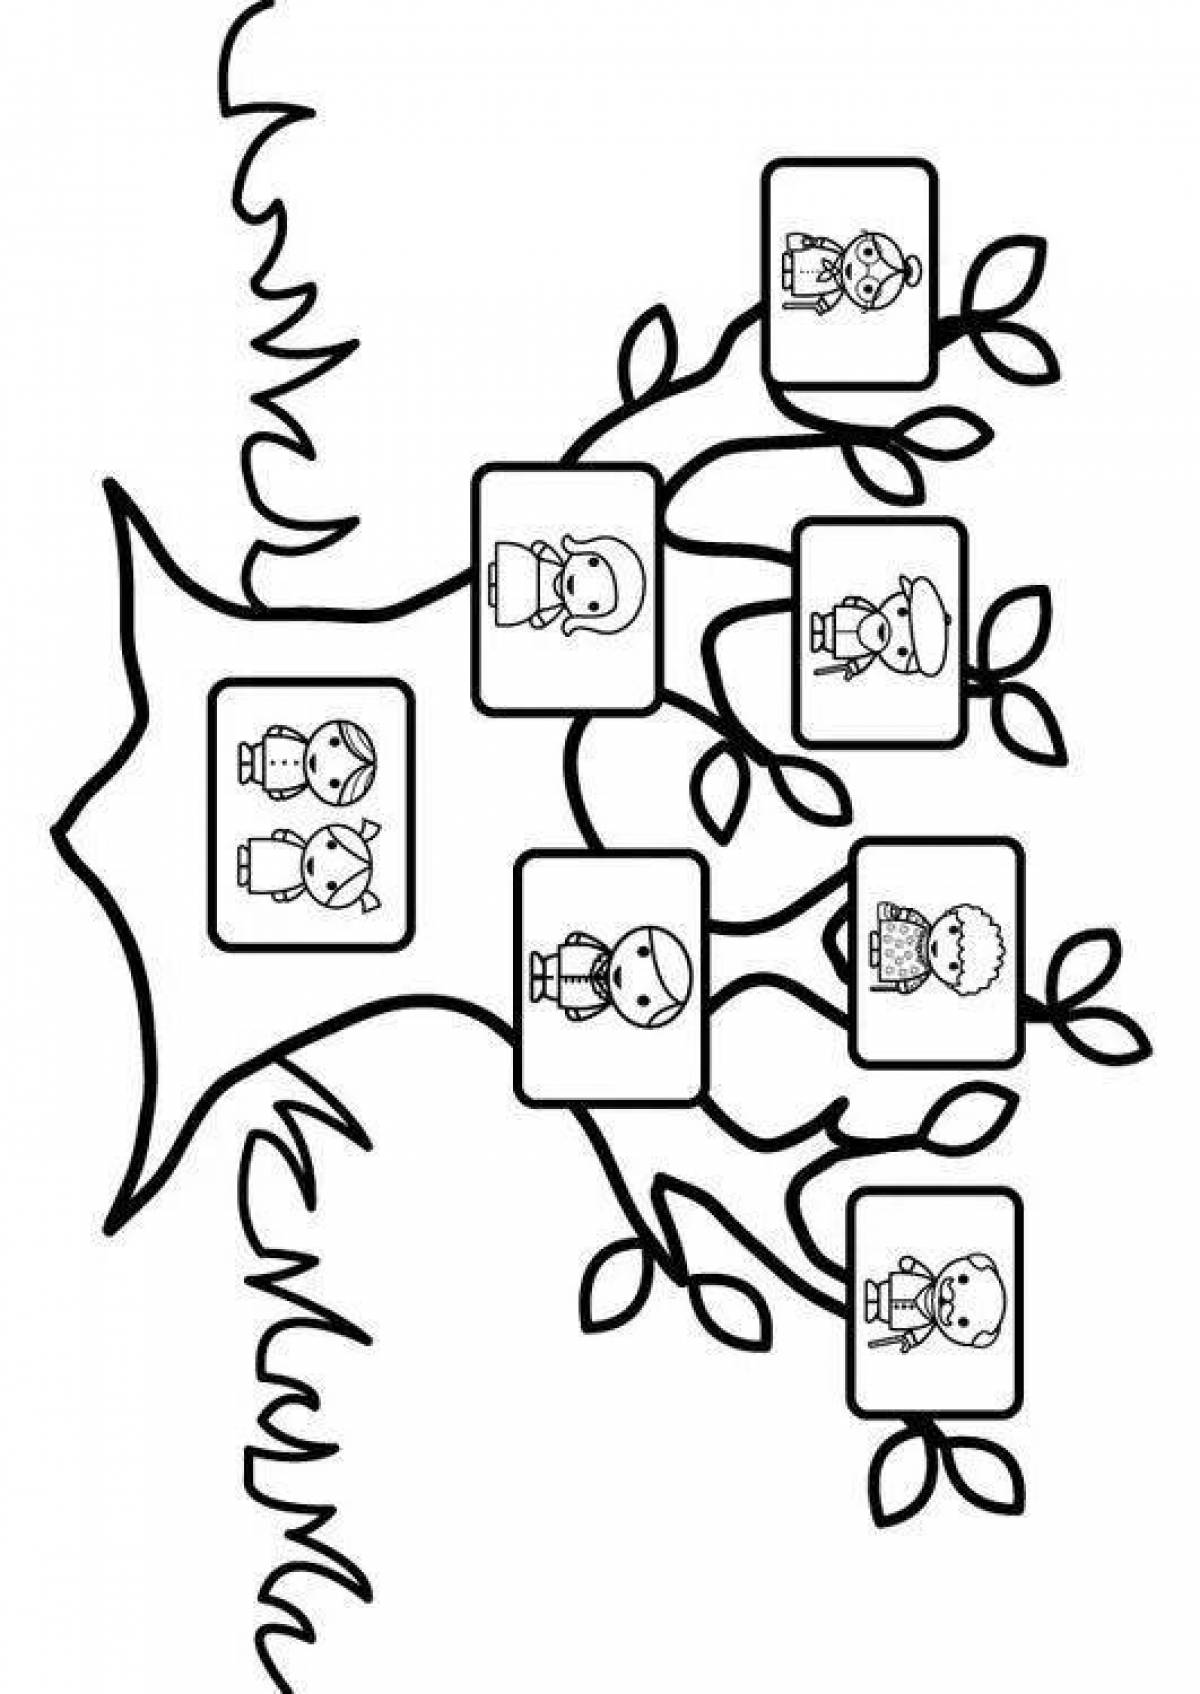 Regal coloring page универсальное дерево